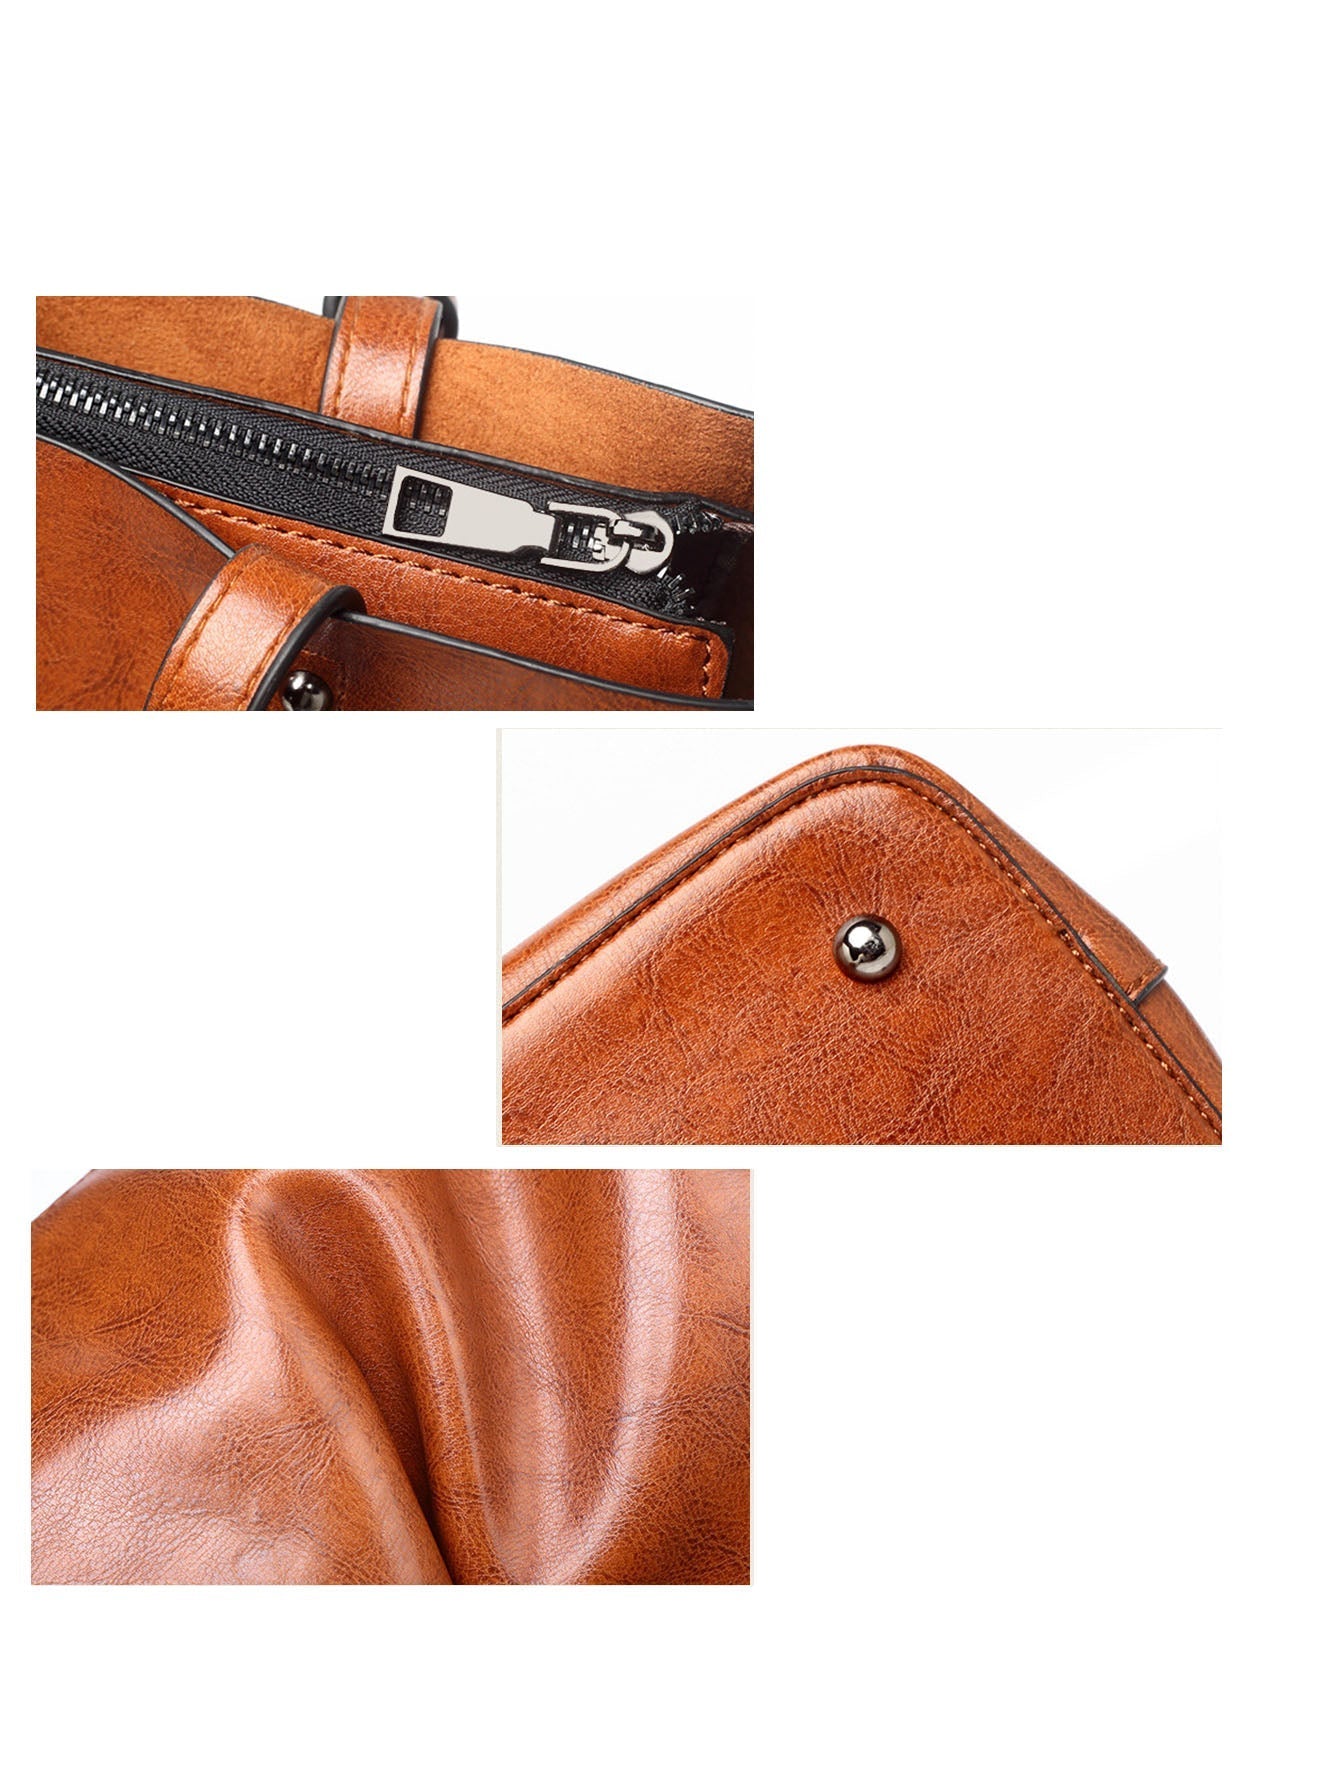 Women's tote bag retro oil leather large capacity women's single shoulder handbag Sai Feel